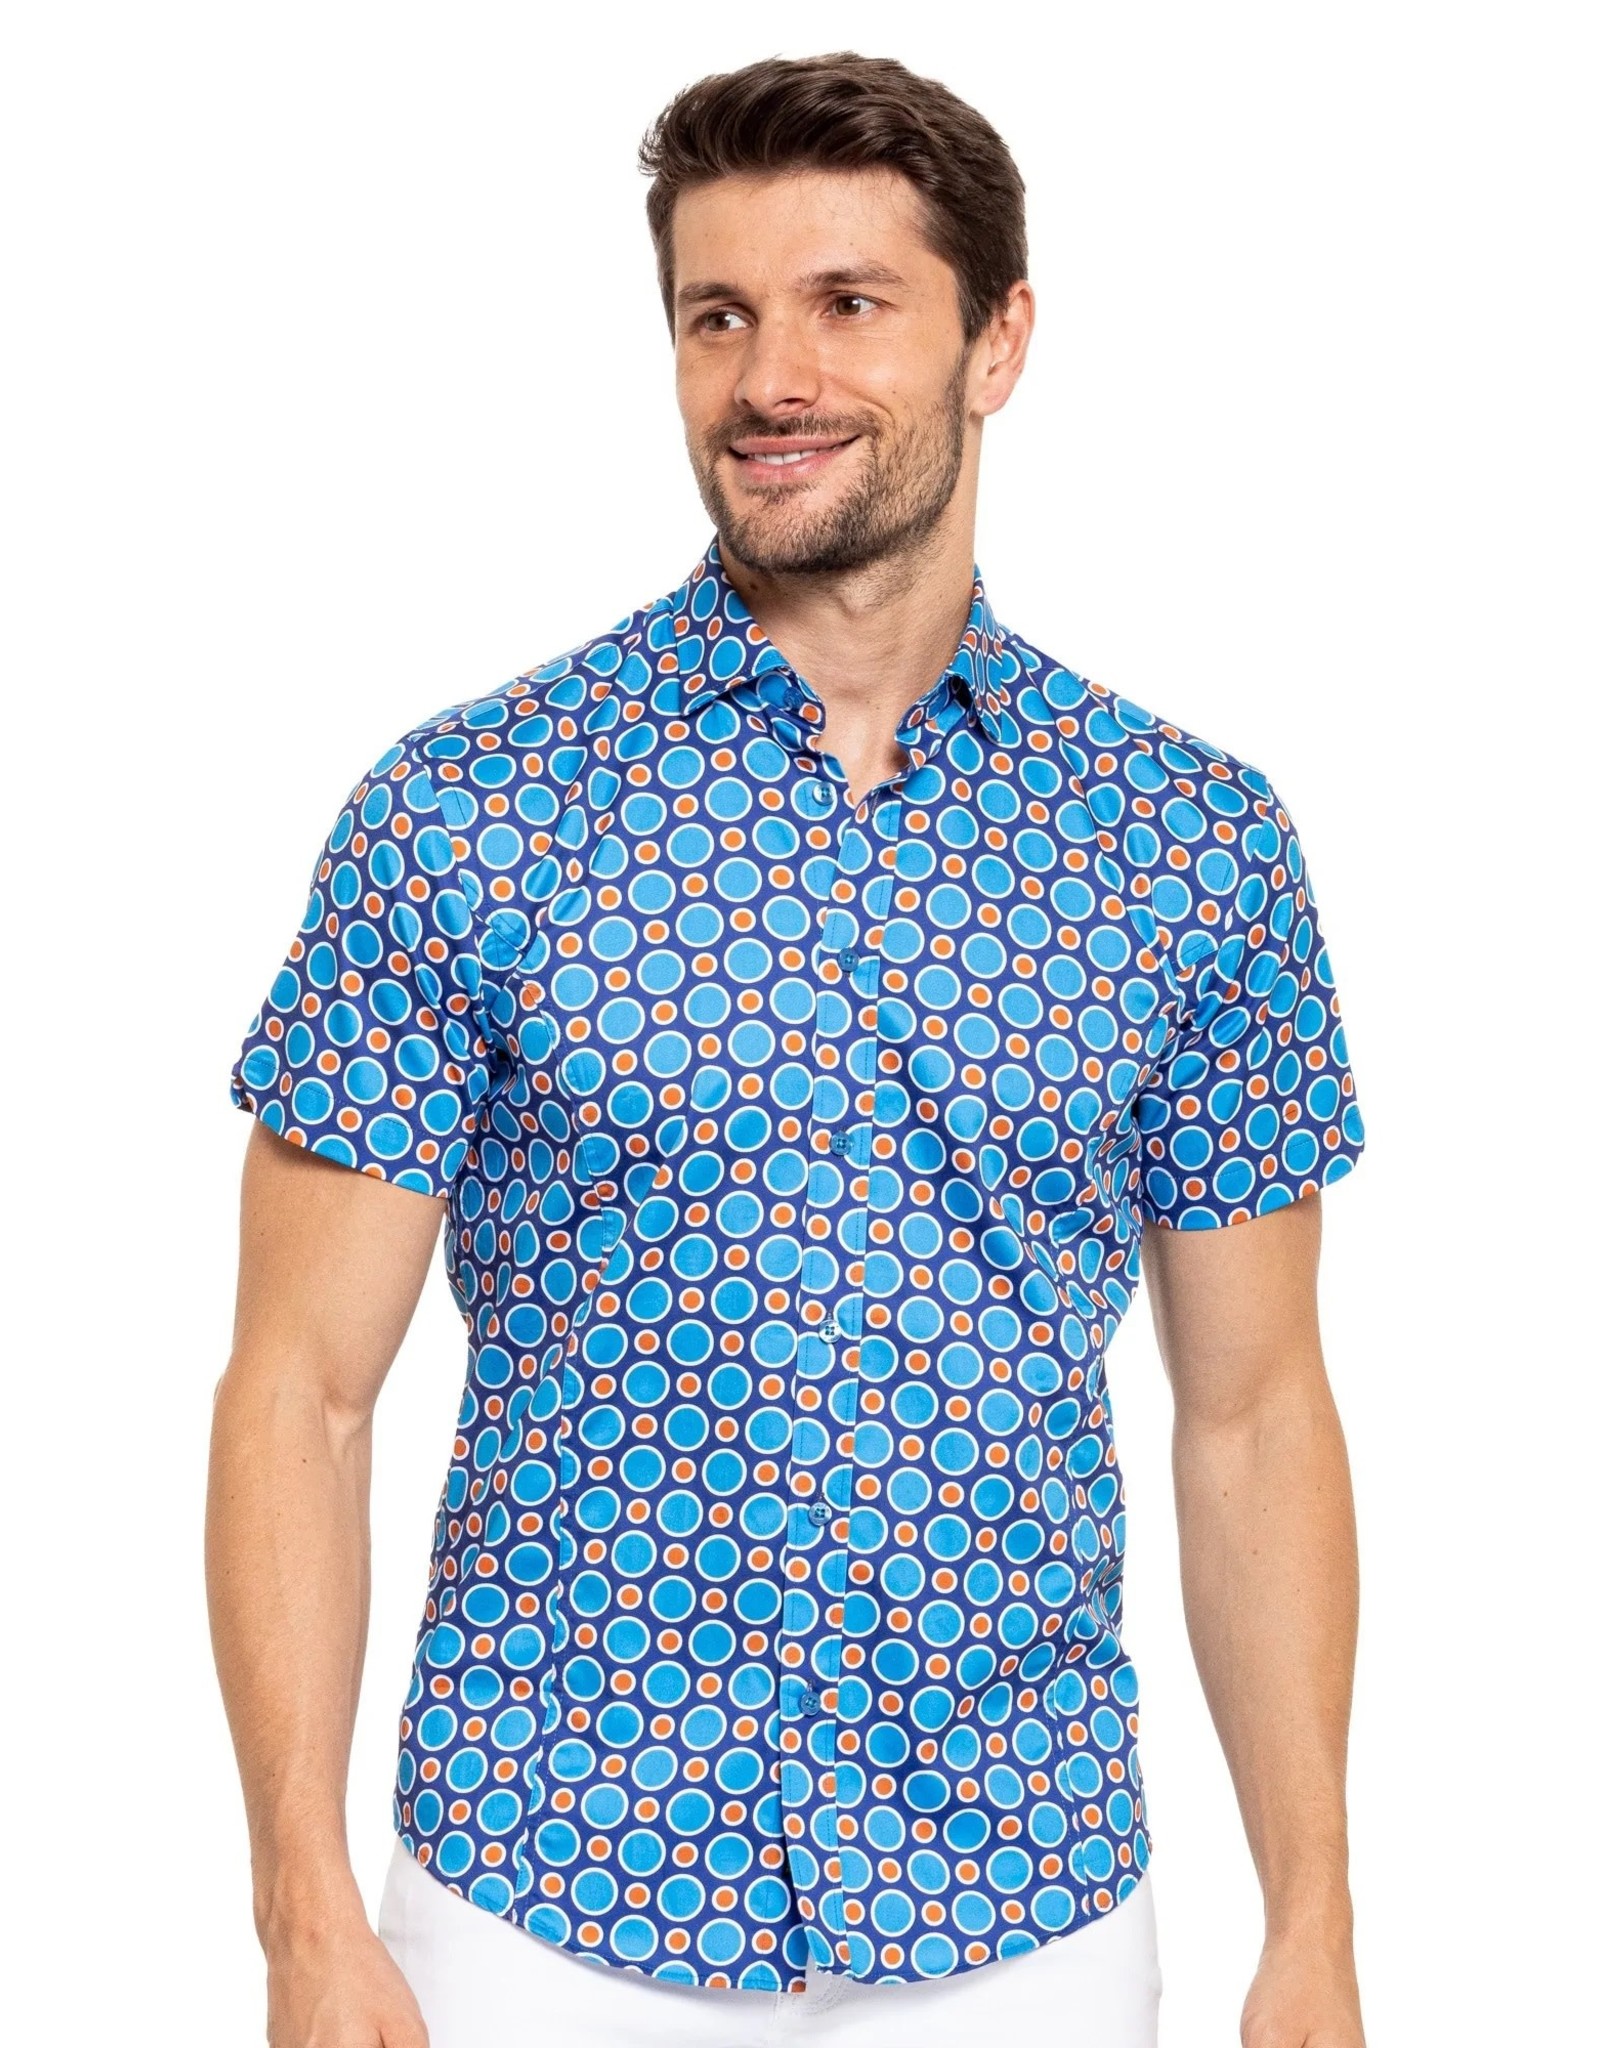 Eight X Dippin' Dots Shirt - Outlines Menswear LLC